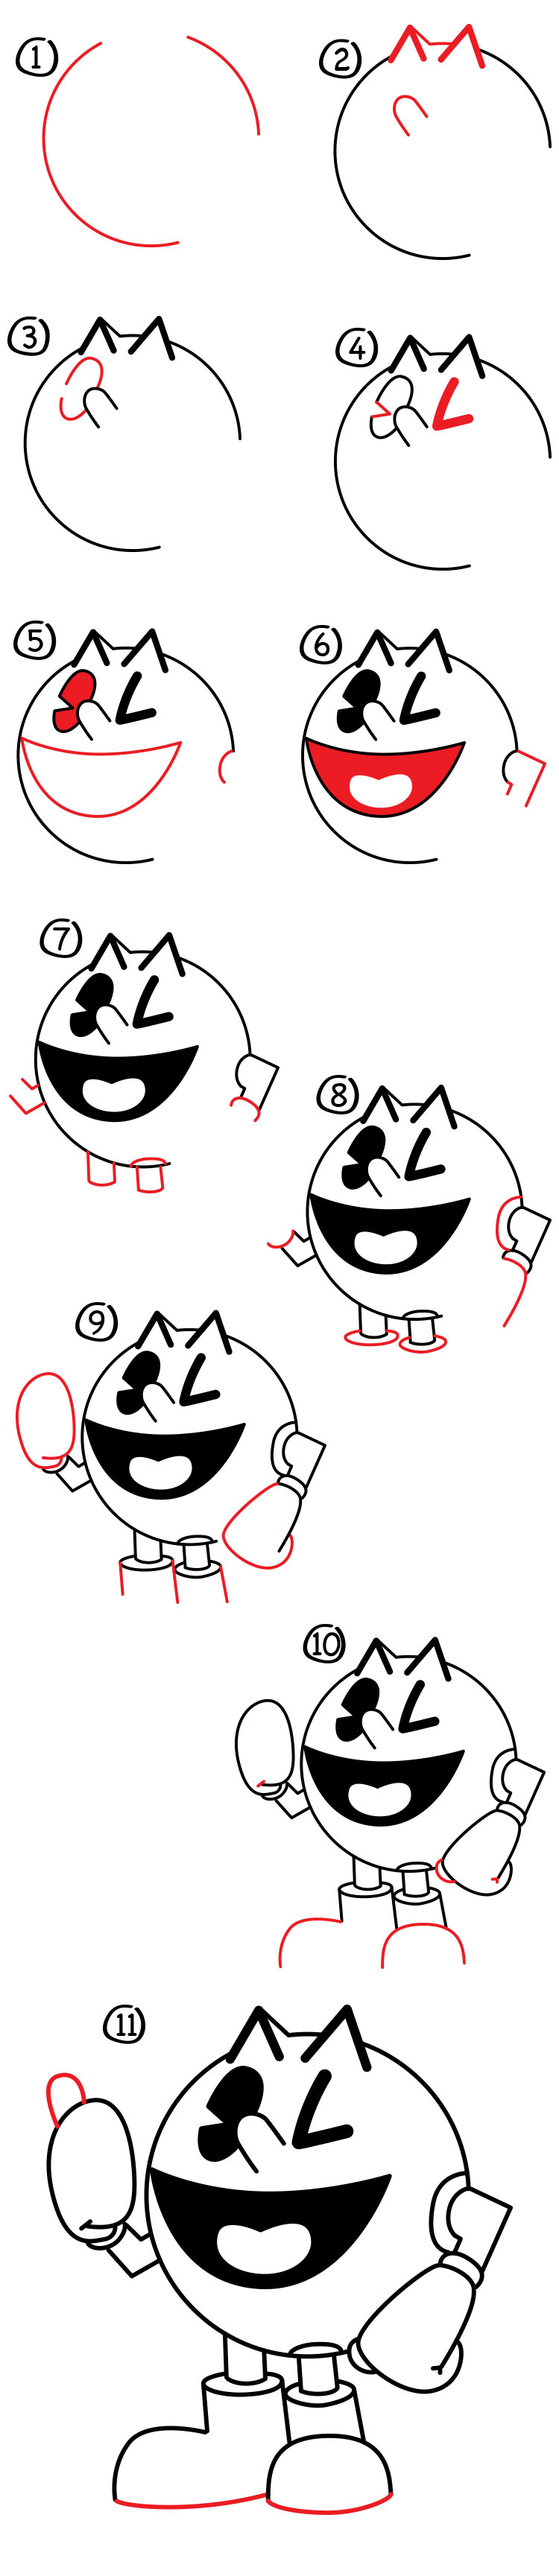 Step 2: Draw Pac-Man’s Eyes